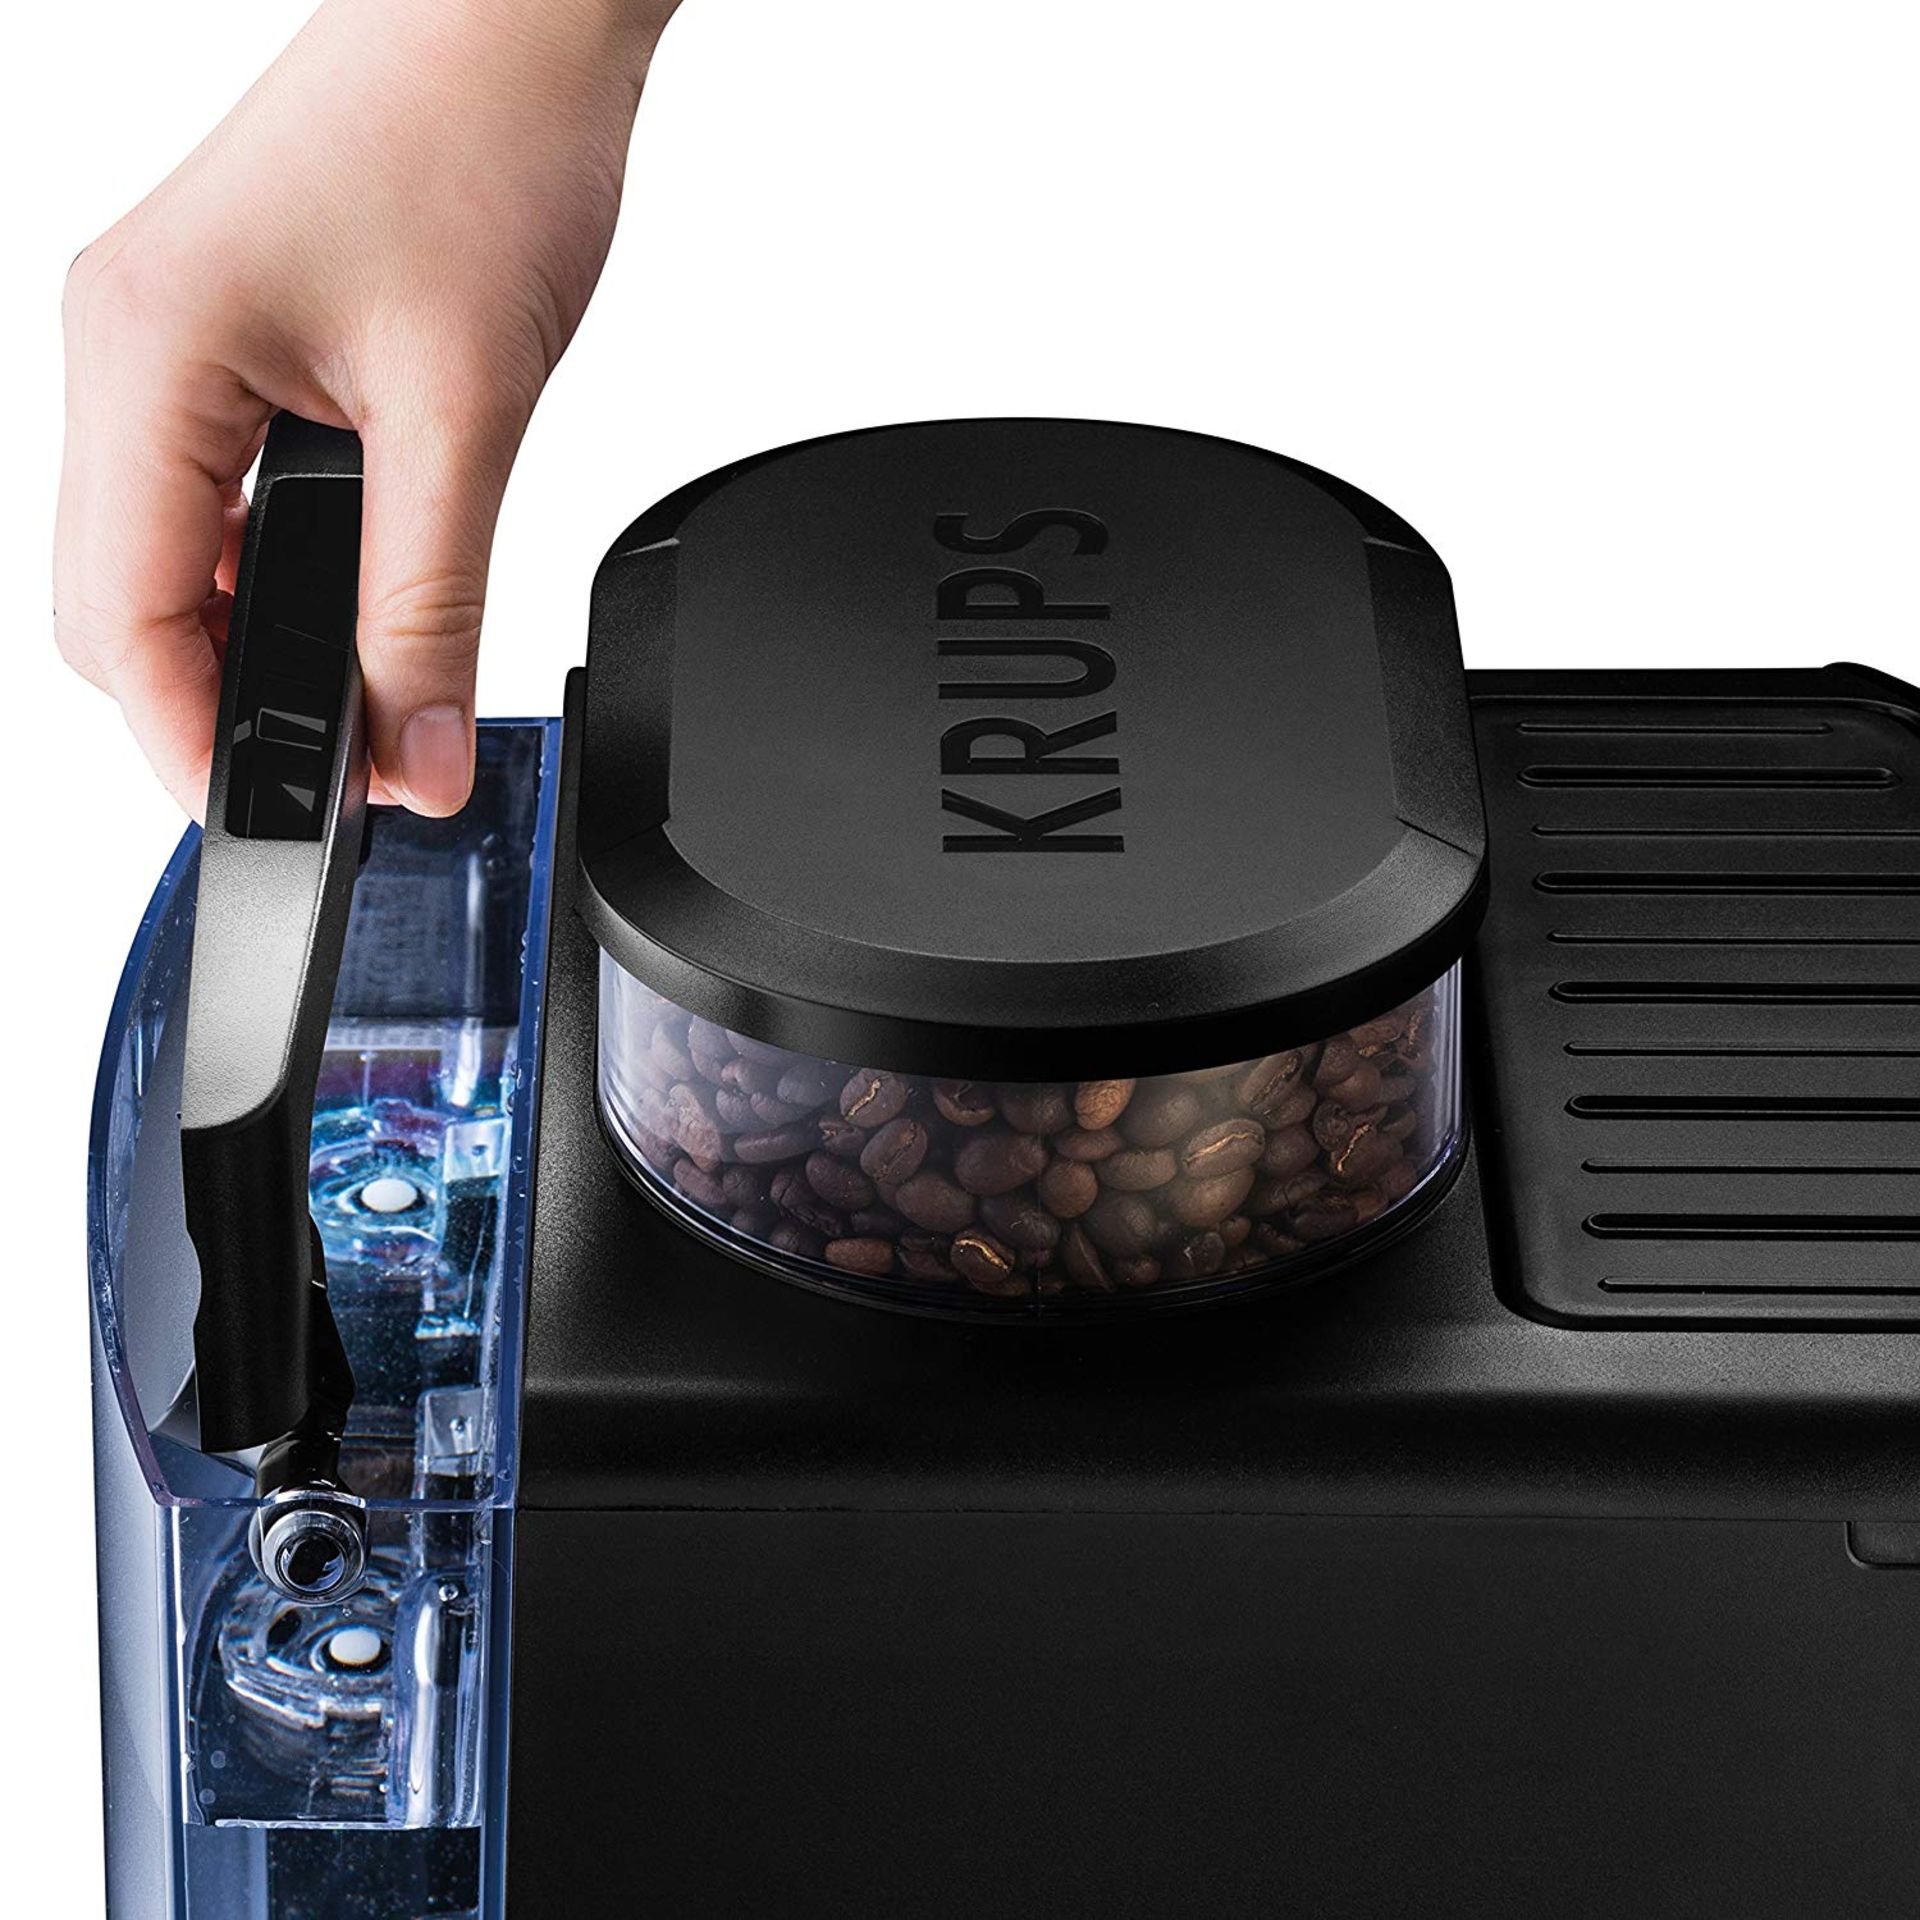 V Brand New Krups EA817040 Arabica Super Automatic Espresso Bean To Cup Coffee Machine Black - - Image 2 of 6